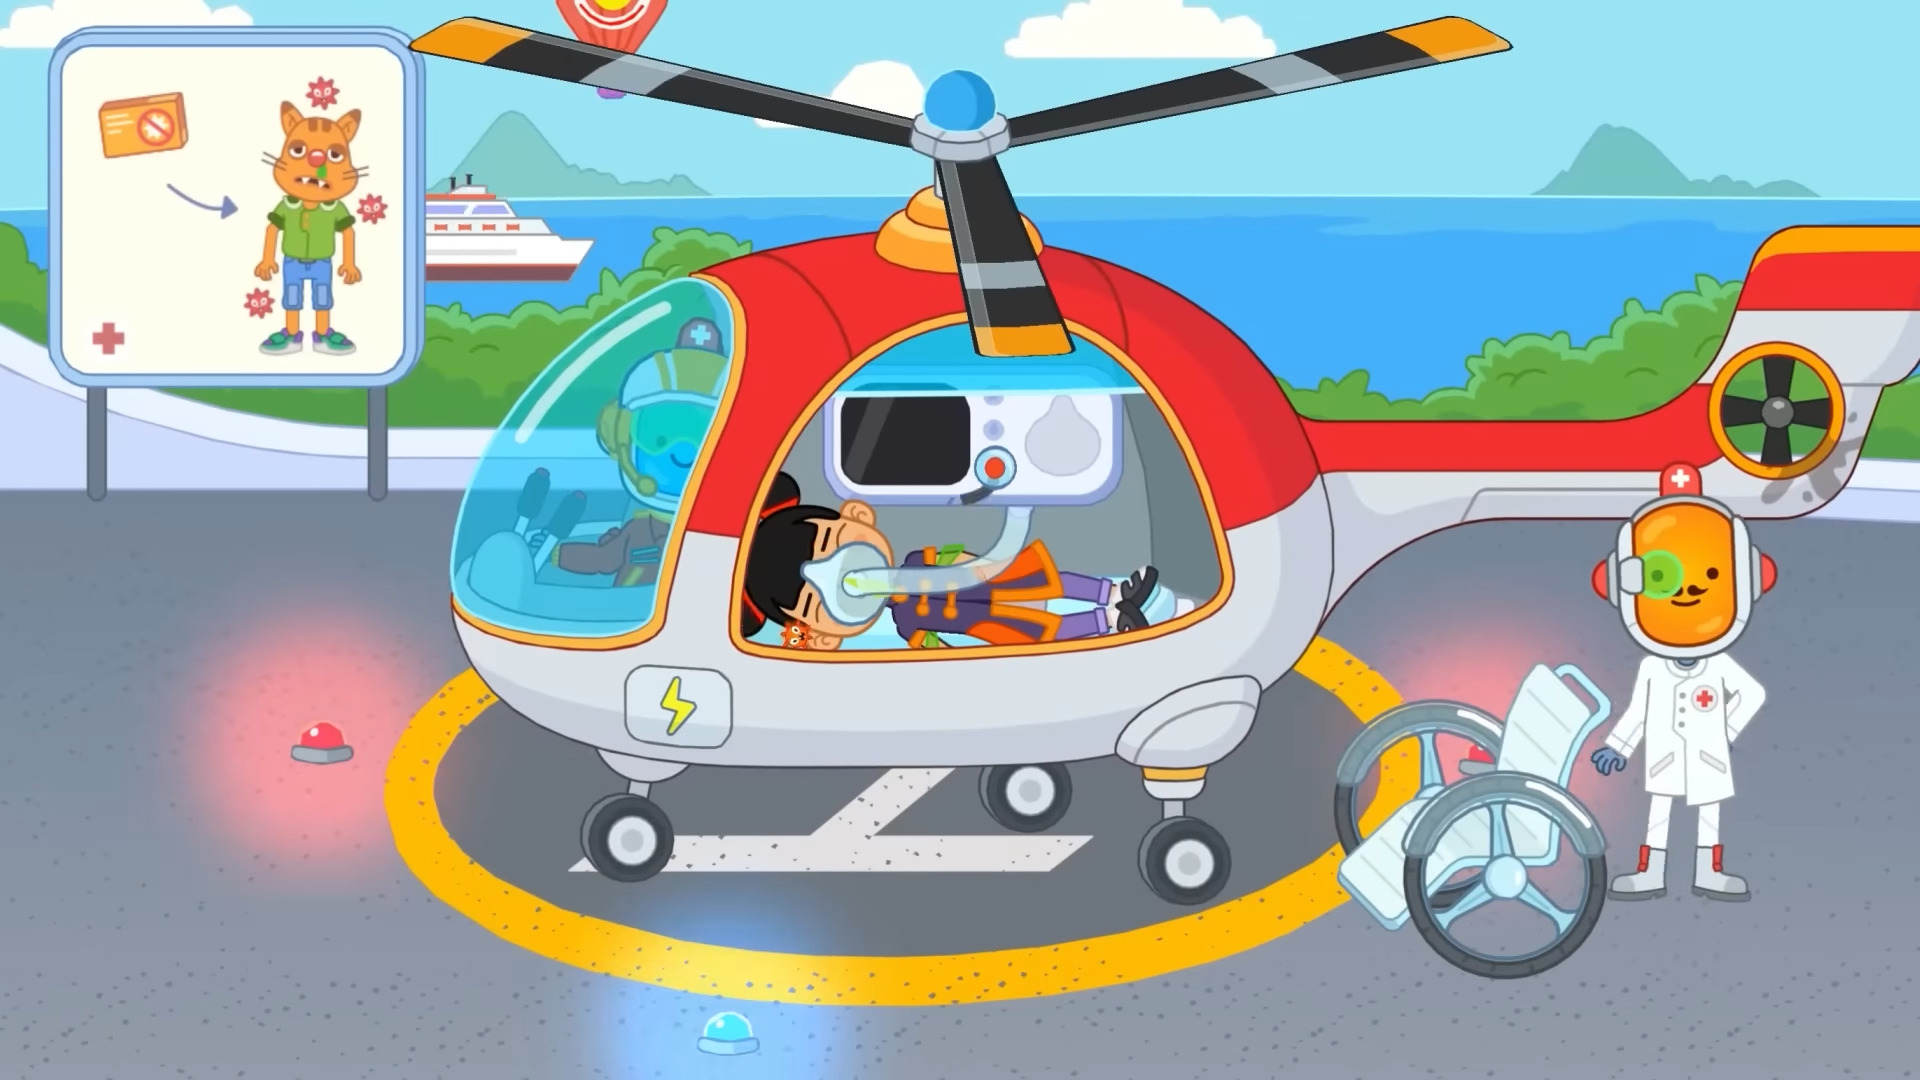 Pepi Hospital 2: Flu Clinic - Android game screenshots.